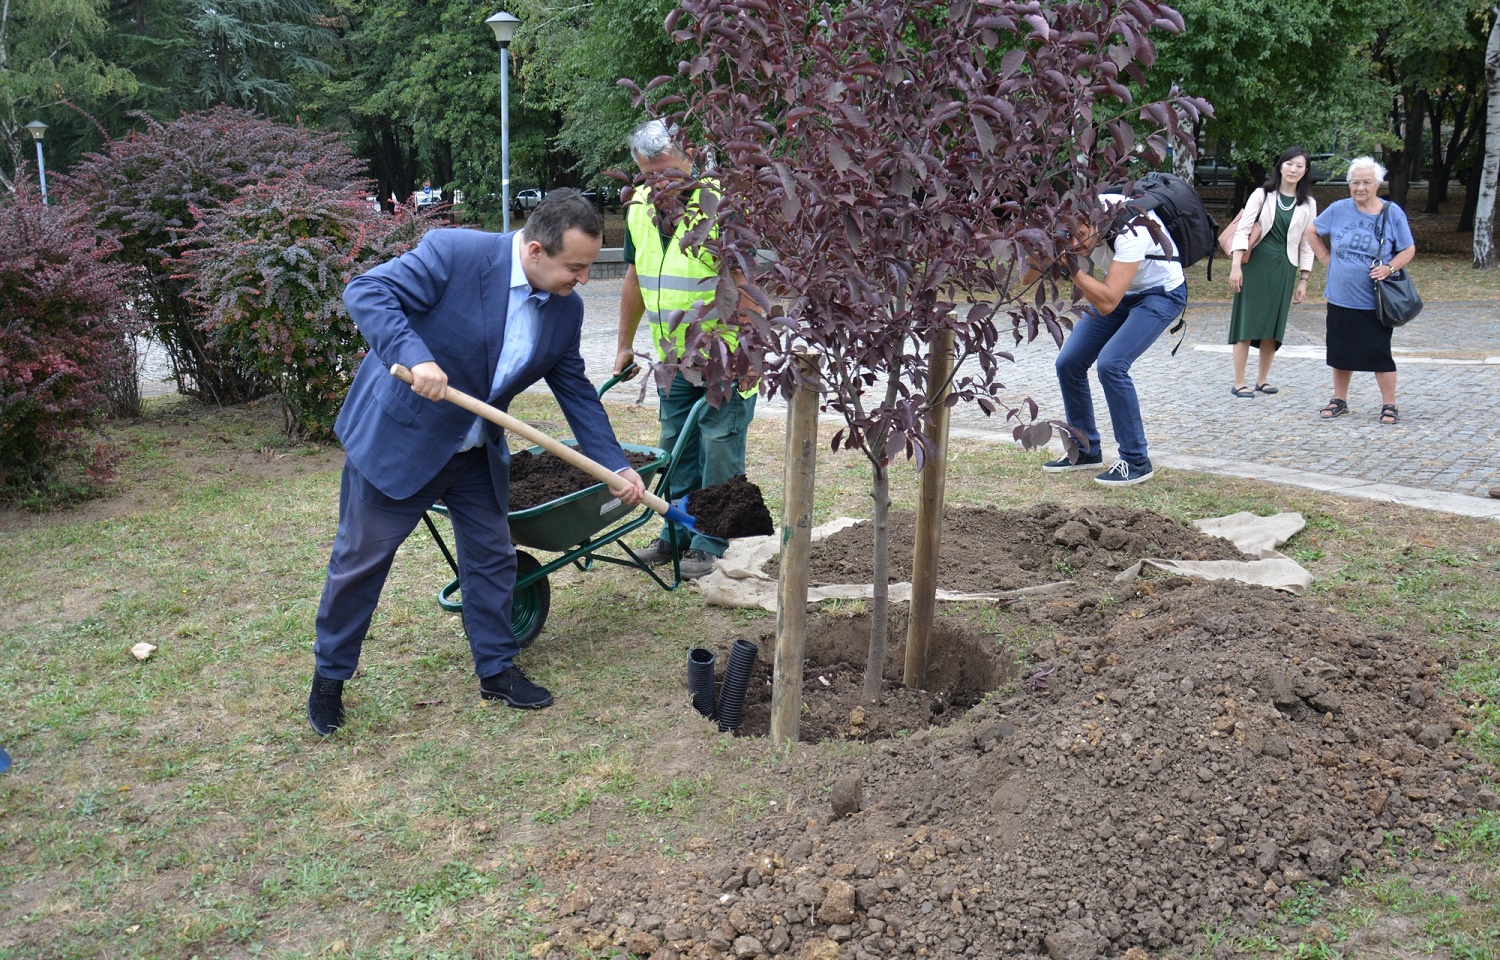 Dacic planting a Japanese cherry blossom tree